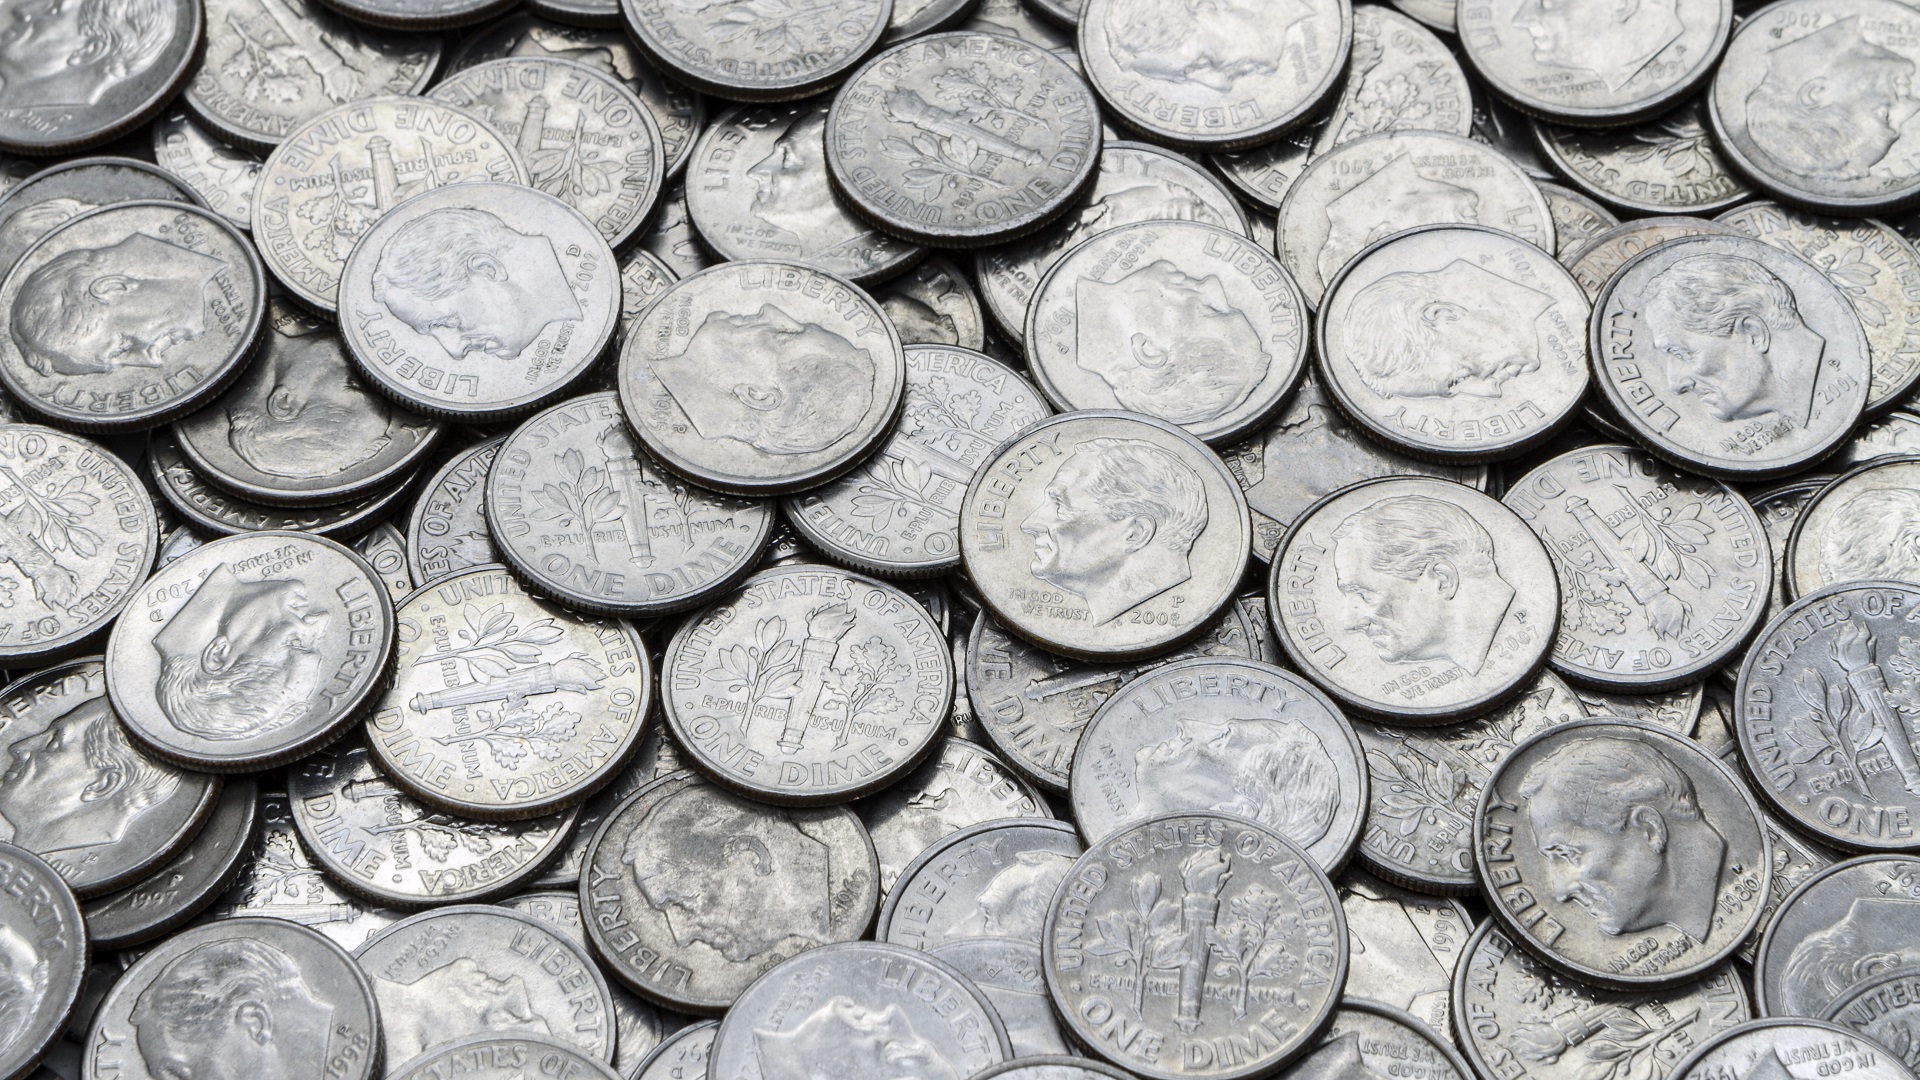 10 Rare Roosevelt Dimes Worth a Lot of Money